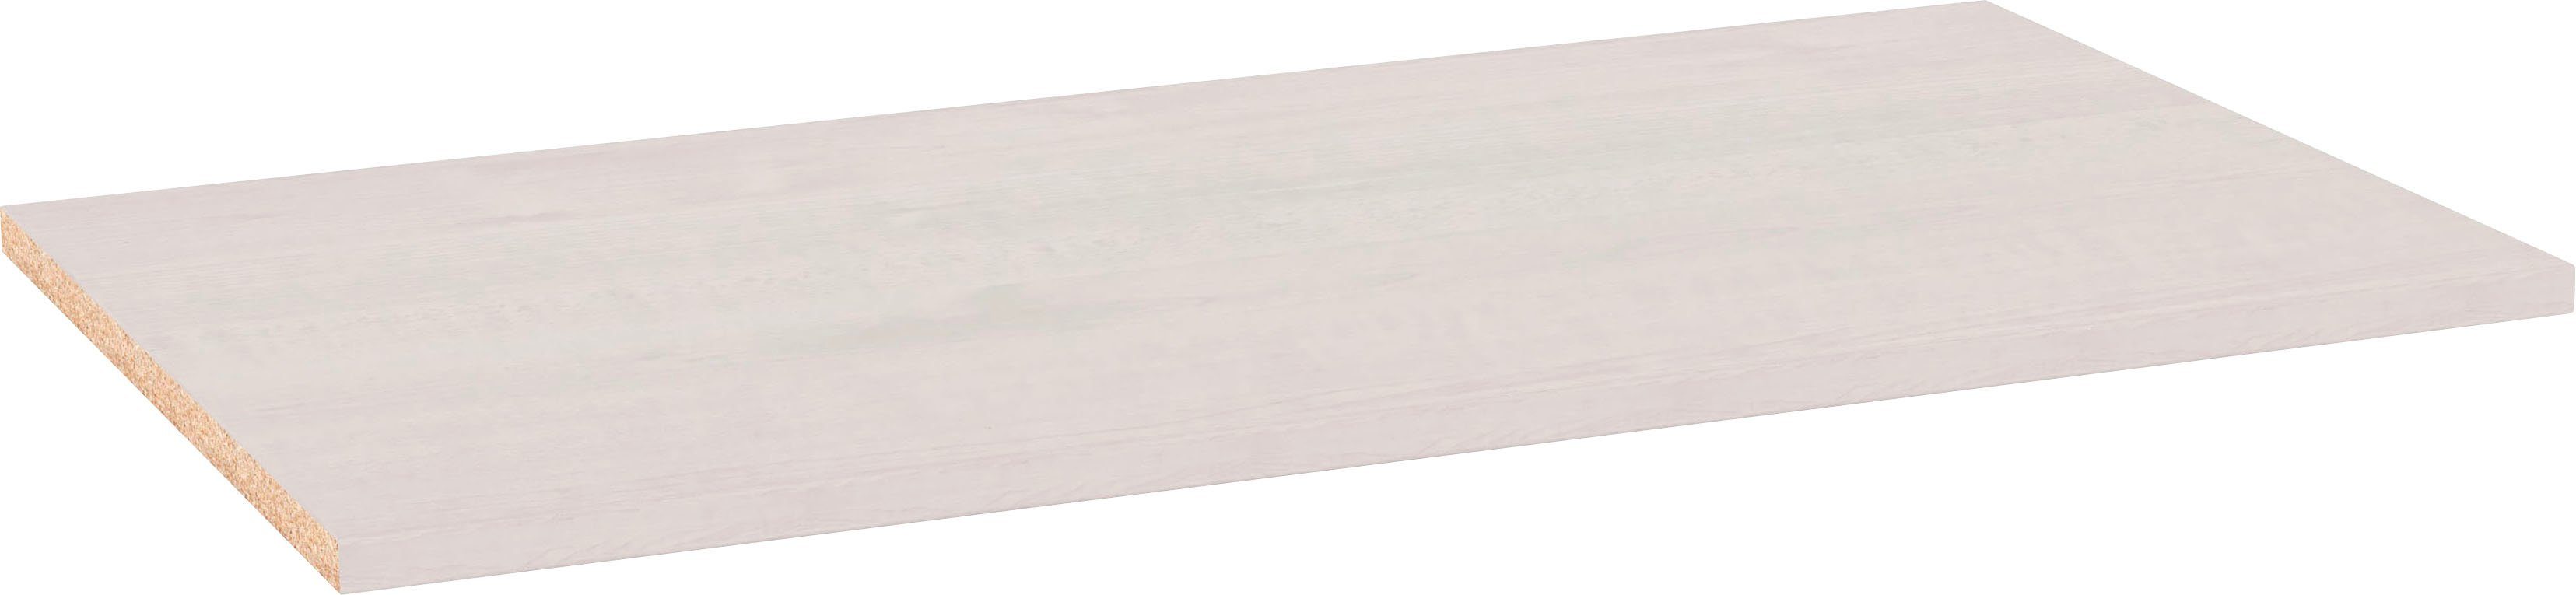 WIEMANN Plank (1 stuk)